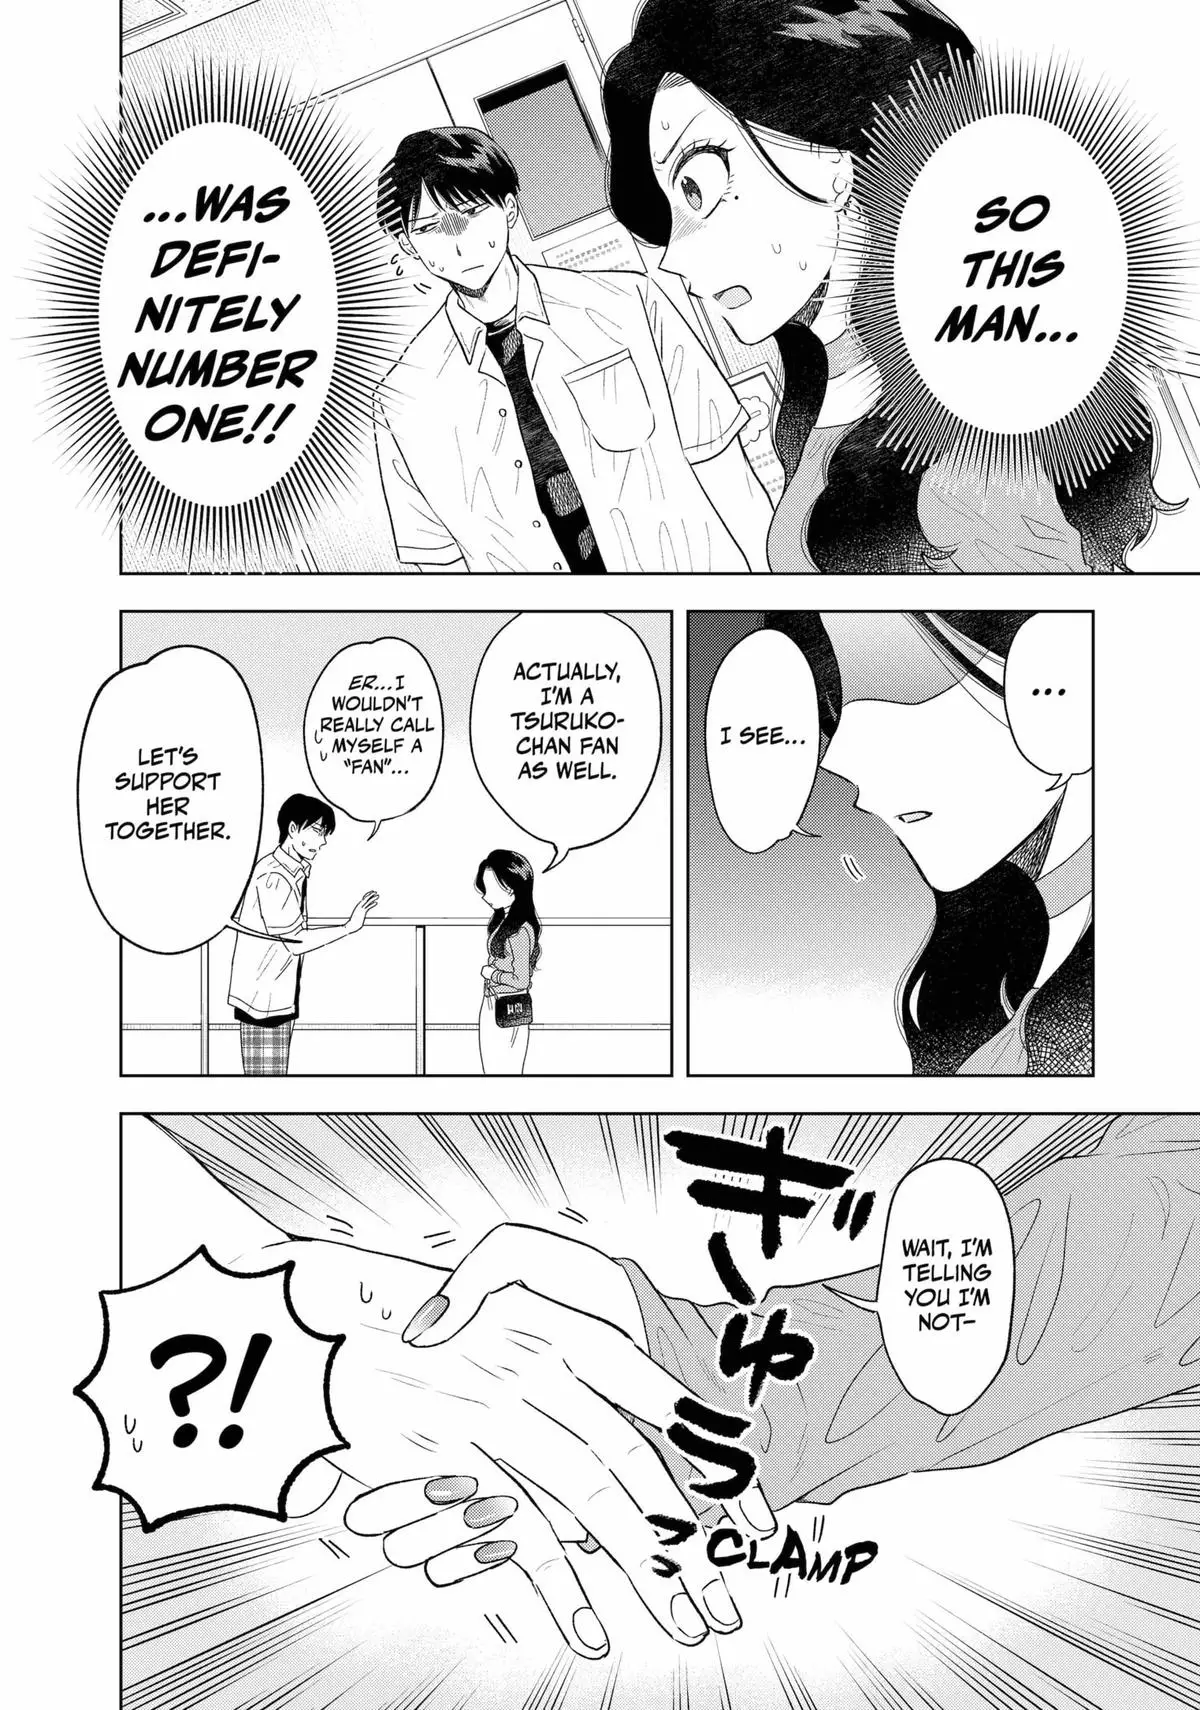 Tsuruko Returns The Favor - 10 page 22-83573e4f